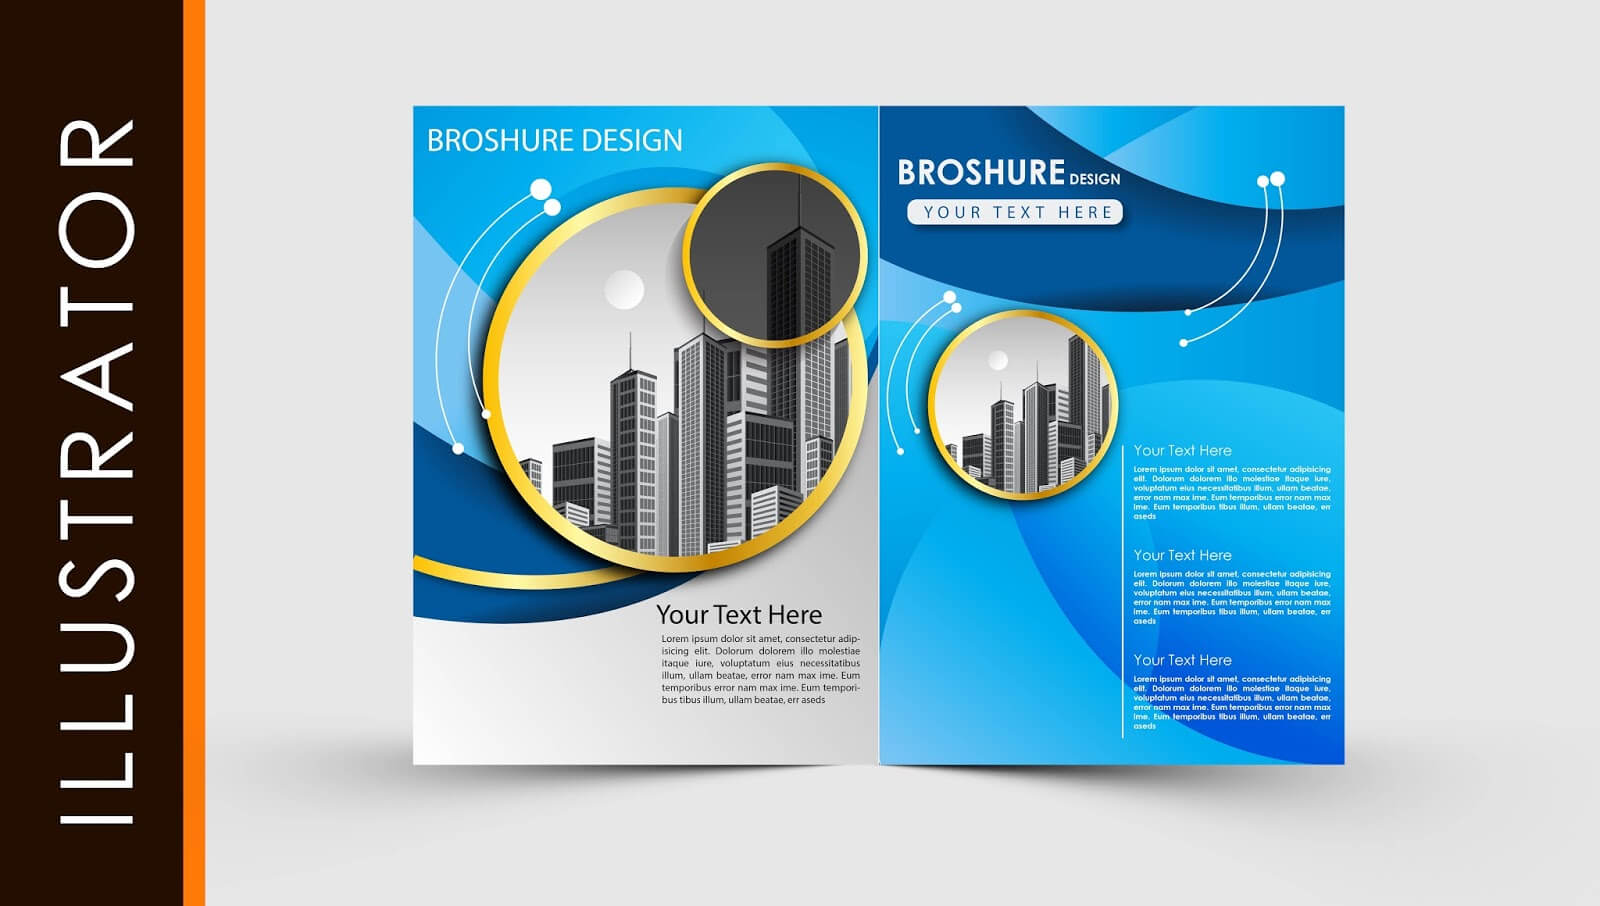 Free Download Adobe Illustrator Template Brochure Two Fold Intended For Adobe Illustrator Brochure Templates Free Download